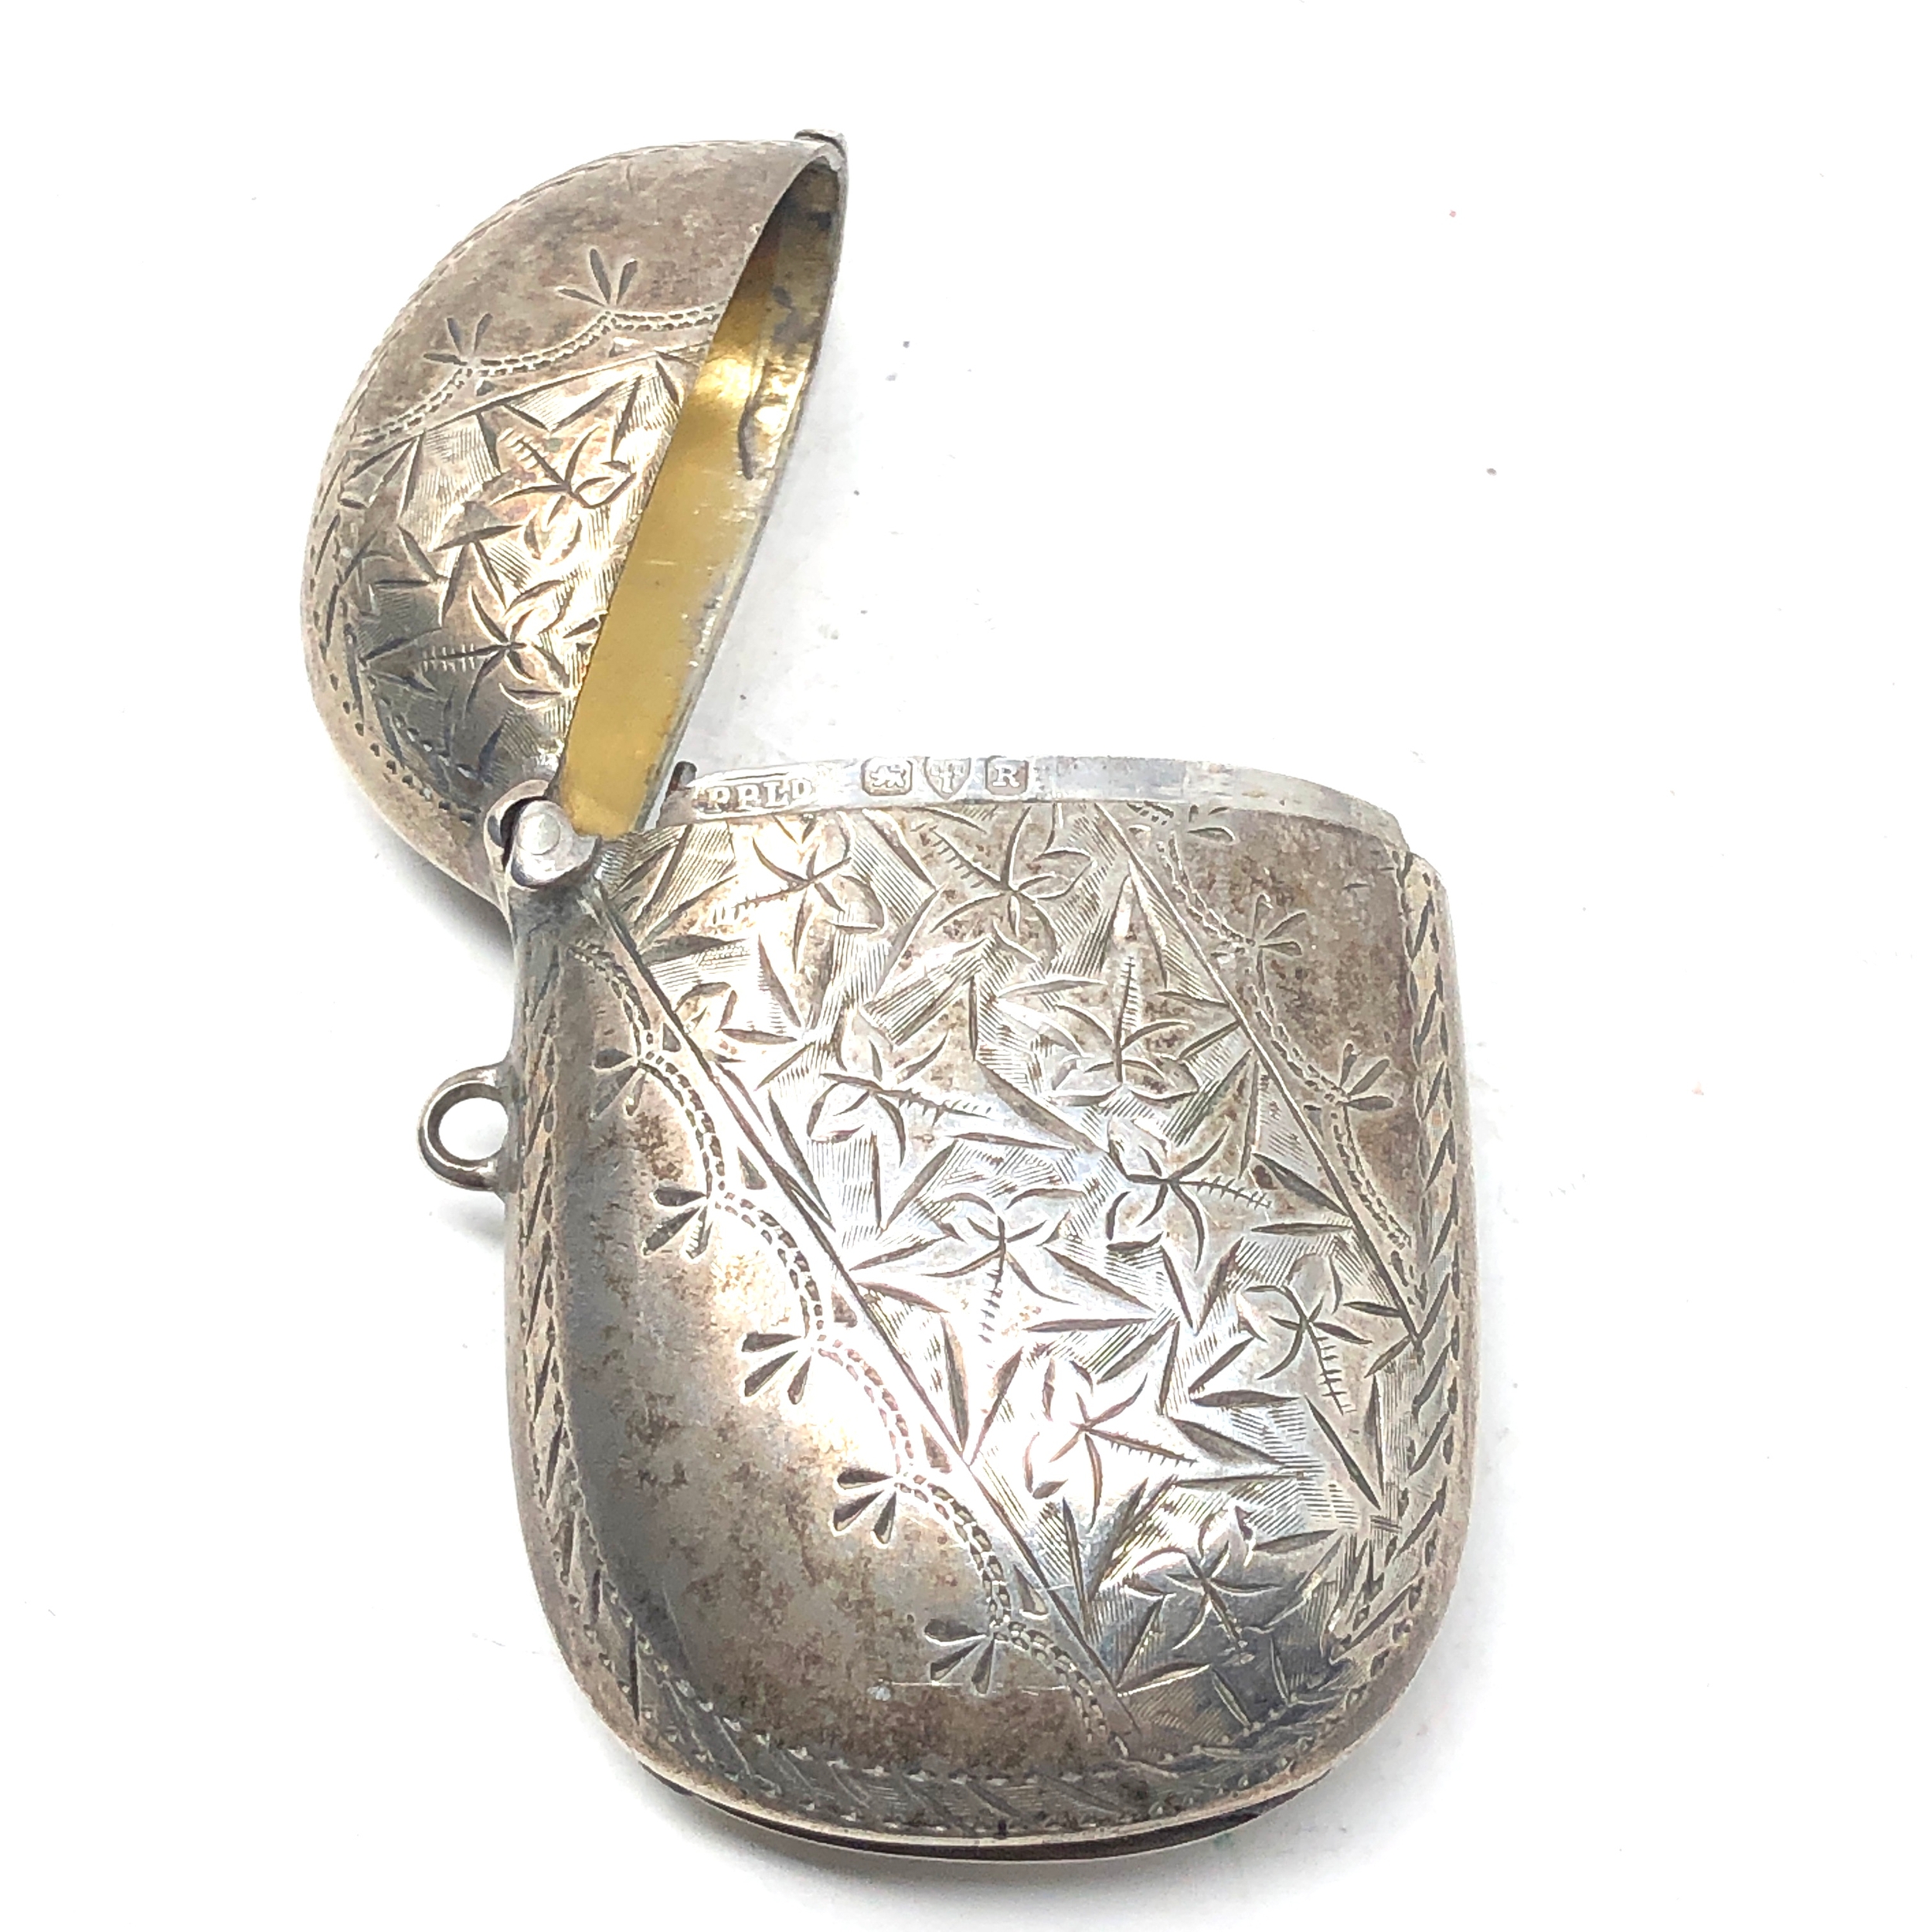 Antique silver vesta case - Image 3 of 4